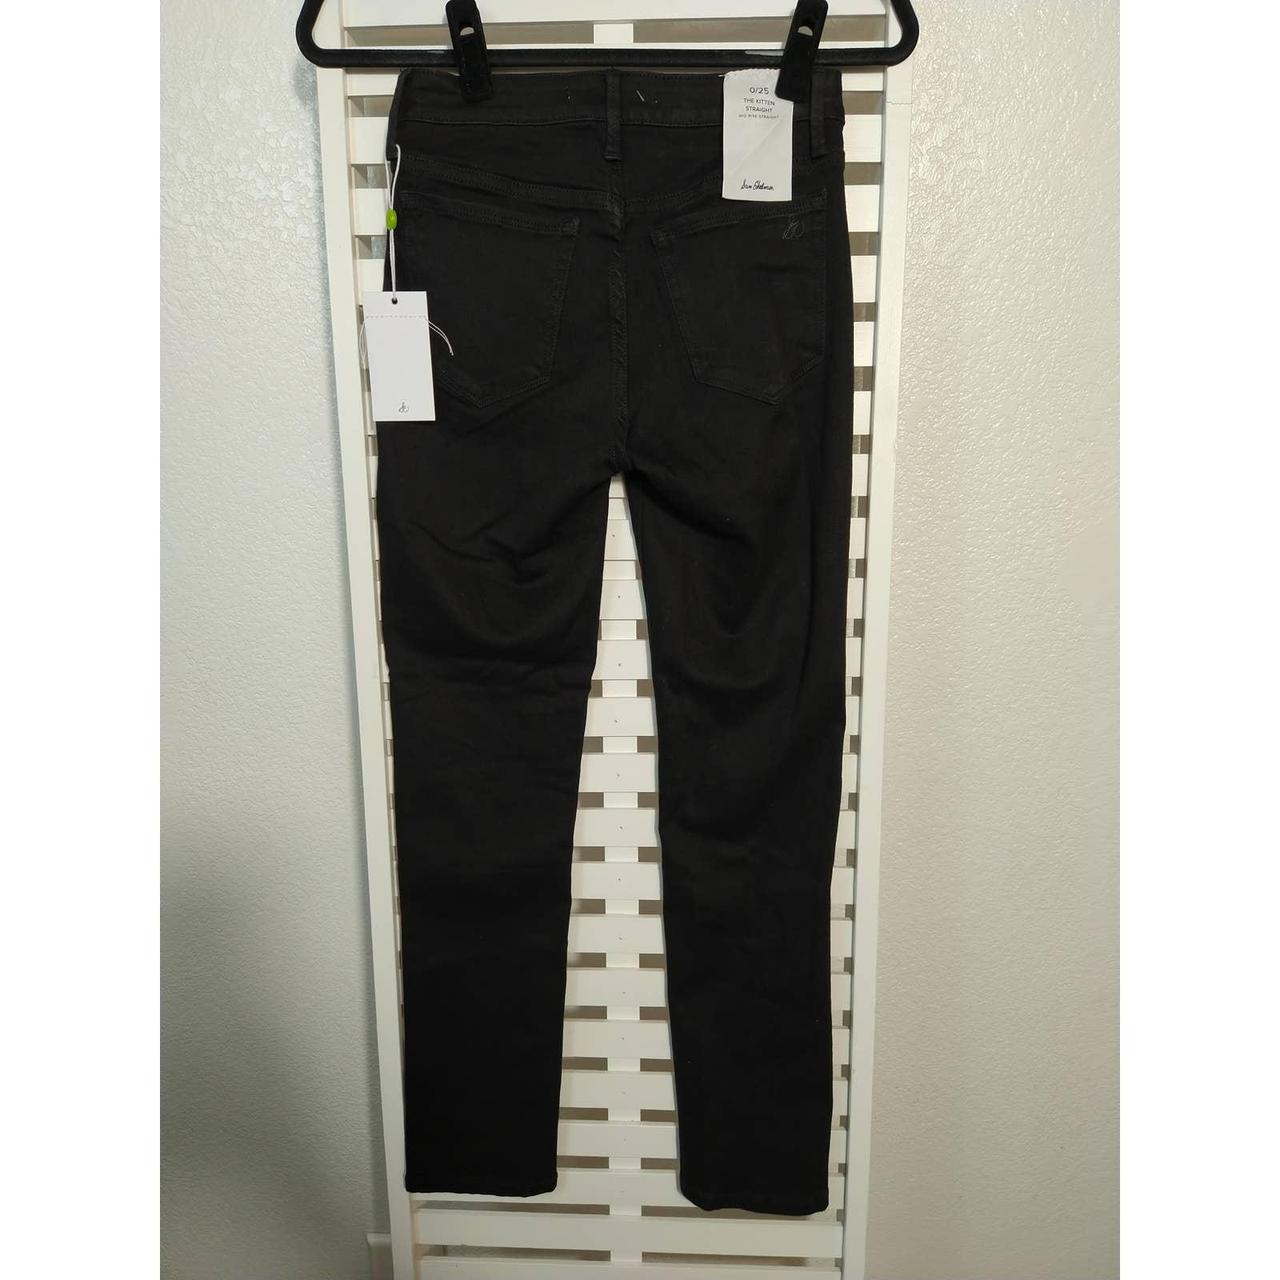 Sam Edelman Women's Black Jeans (4)